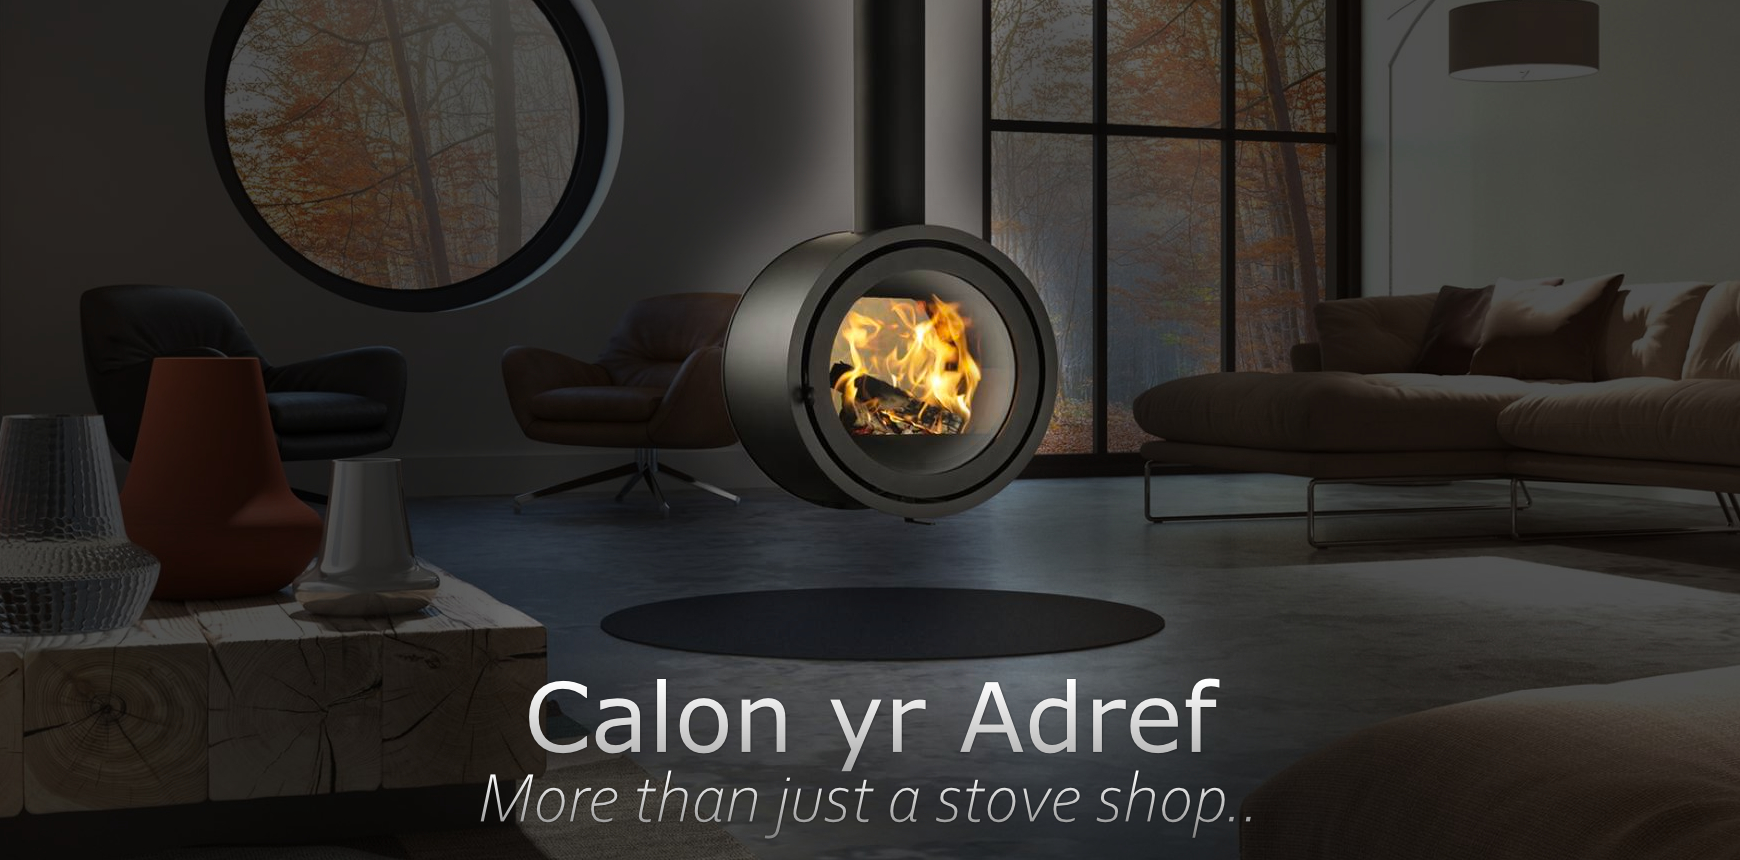 Calon yr Adref - More than just a stove shop!